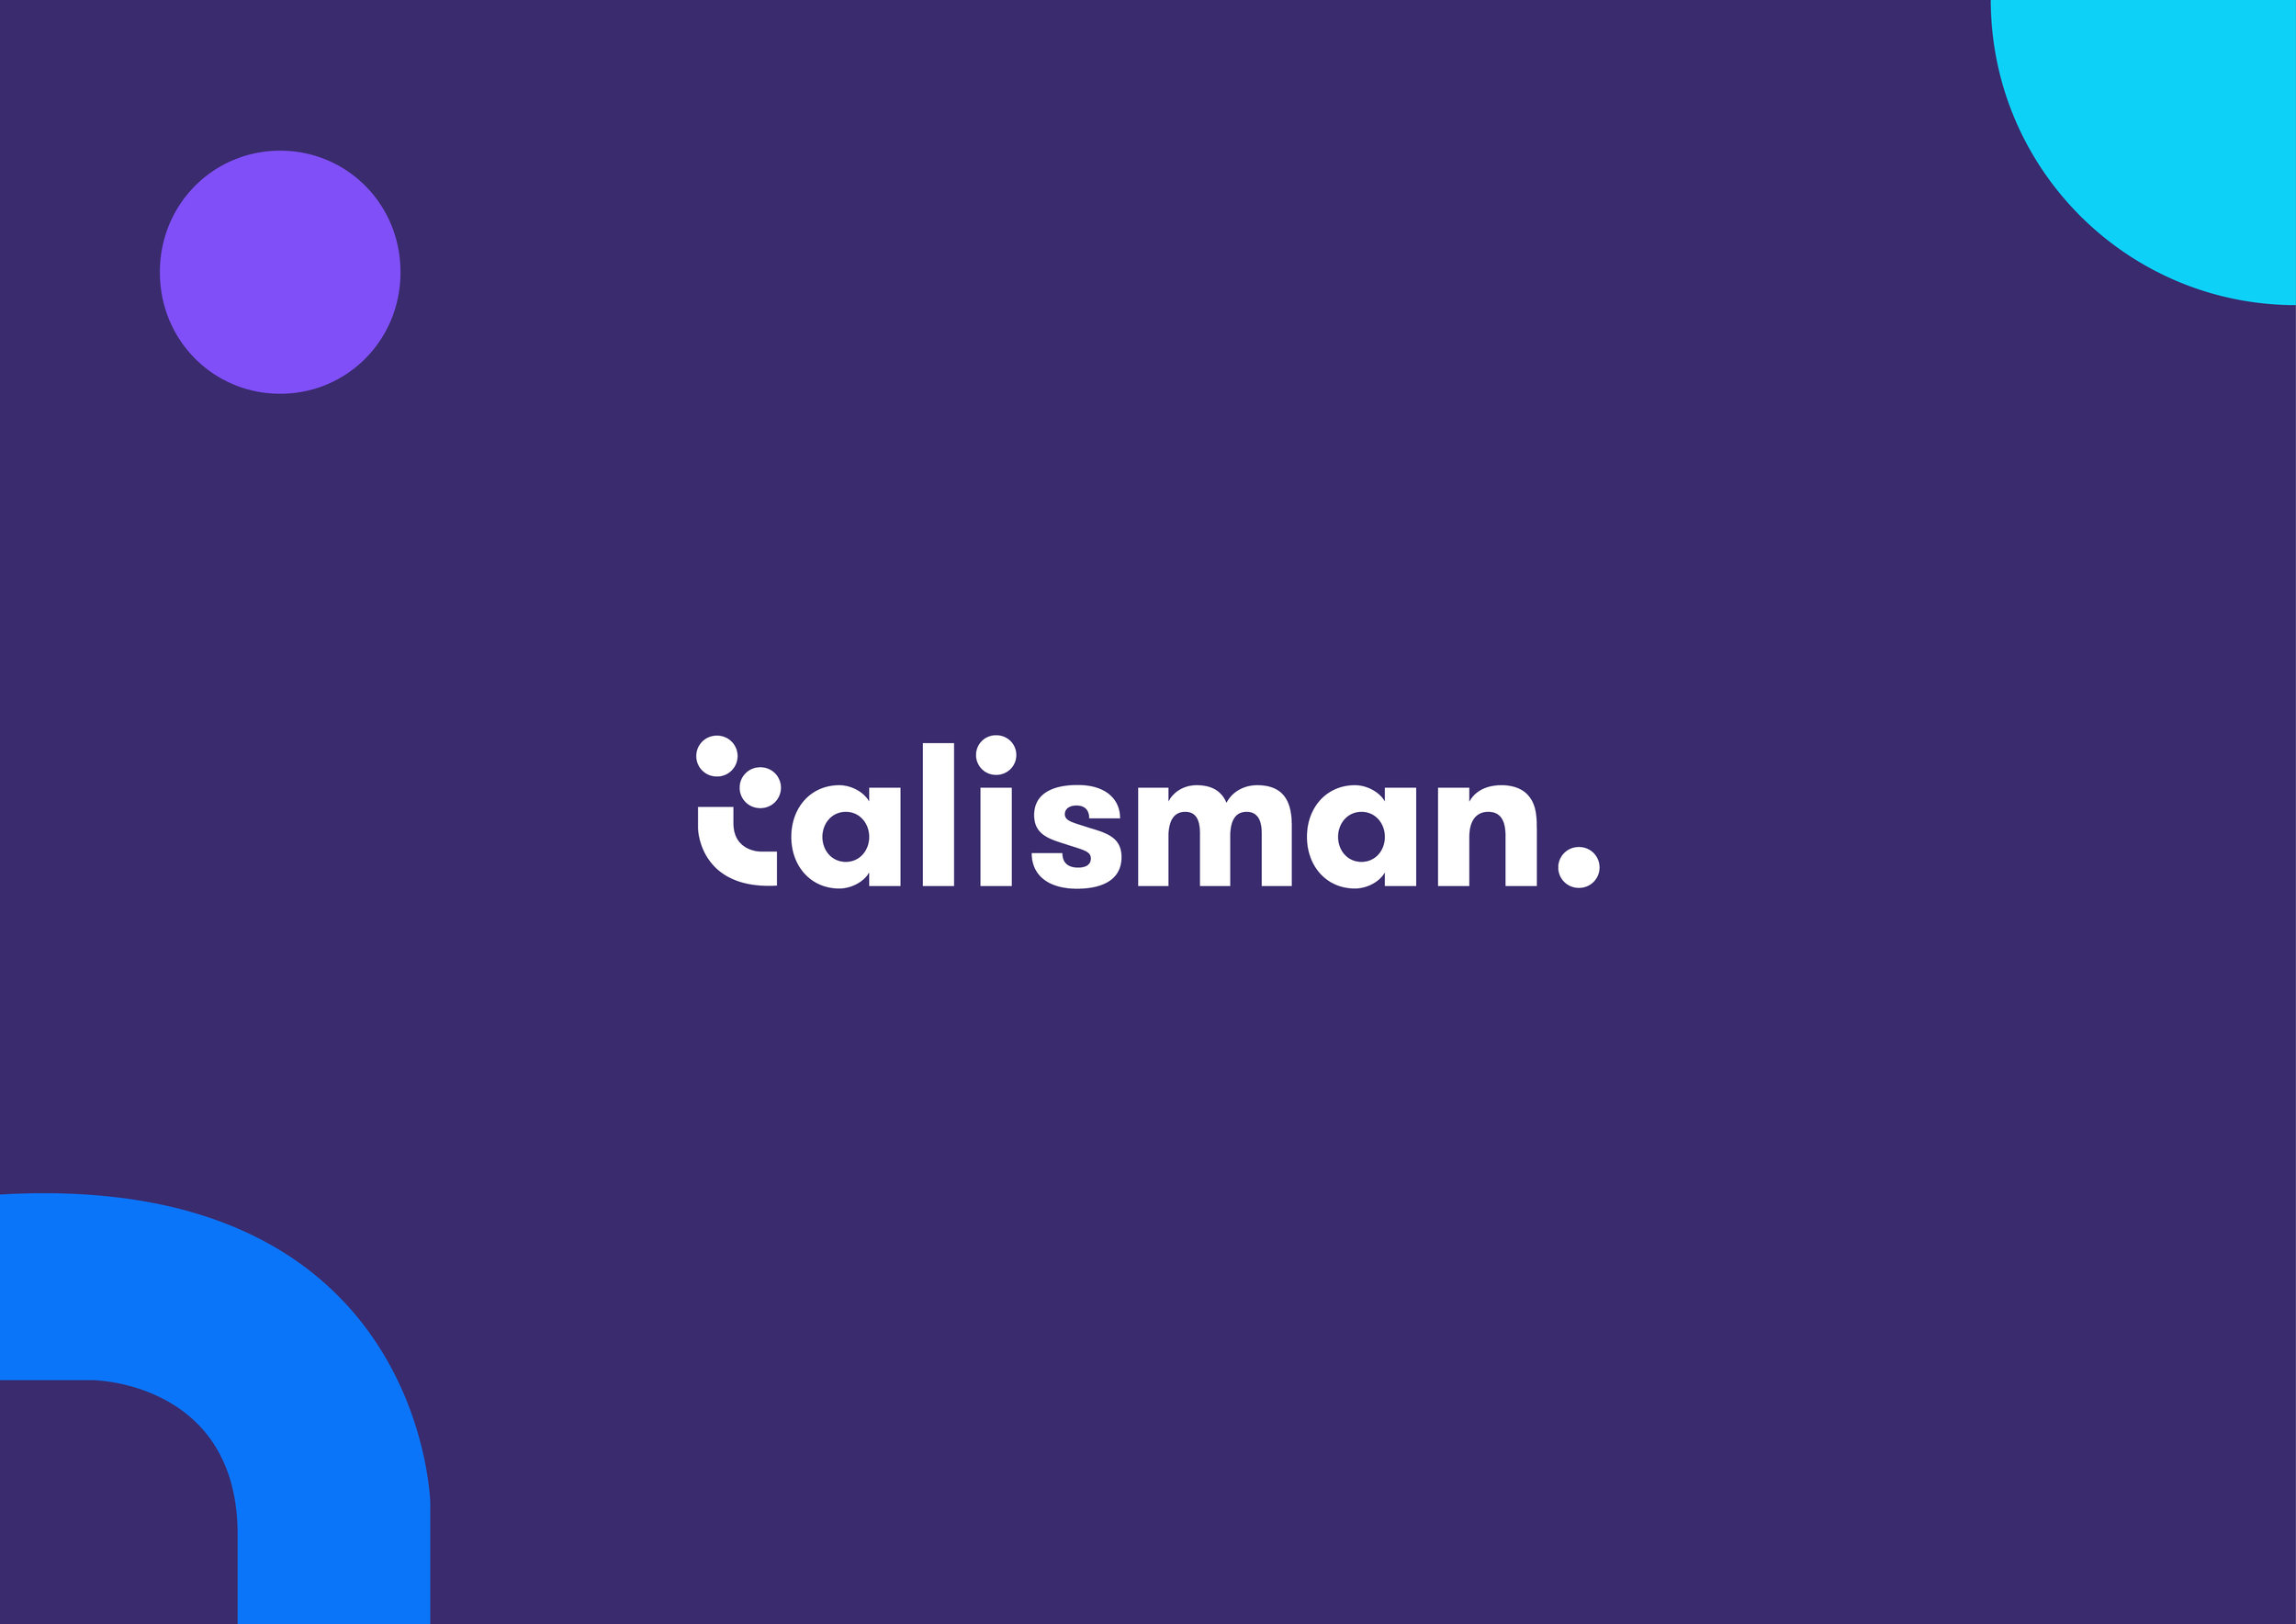 Freelance-graphic-designer-Talisman company font logo in purple background